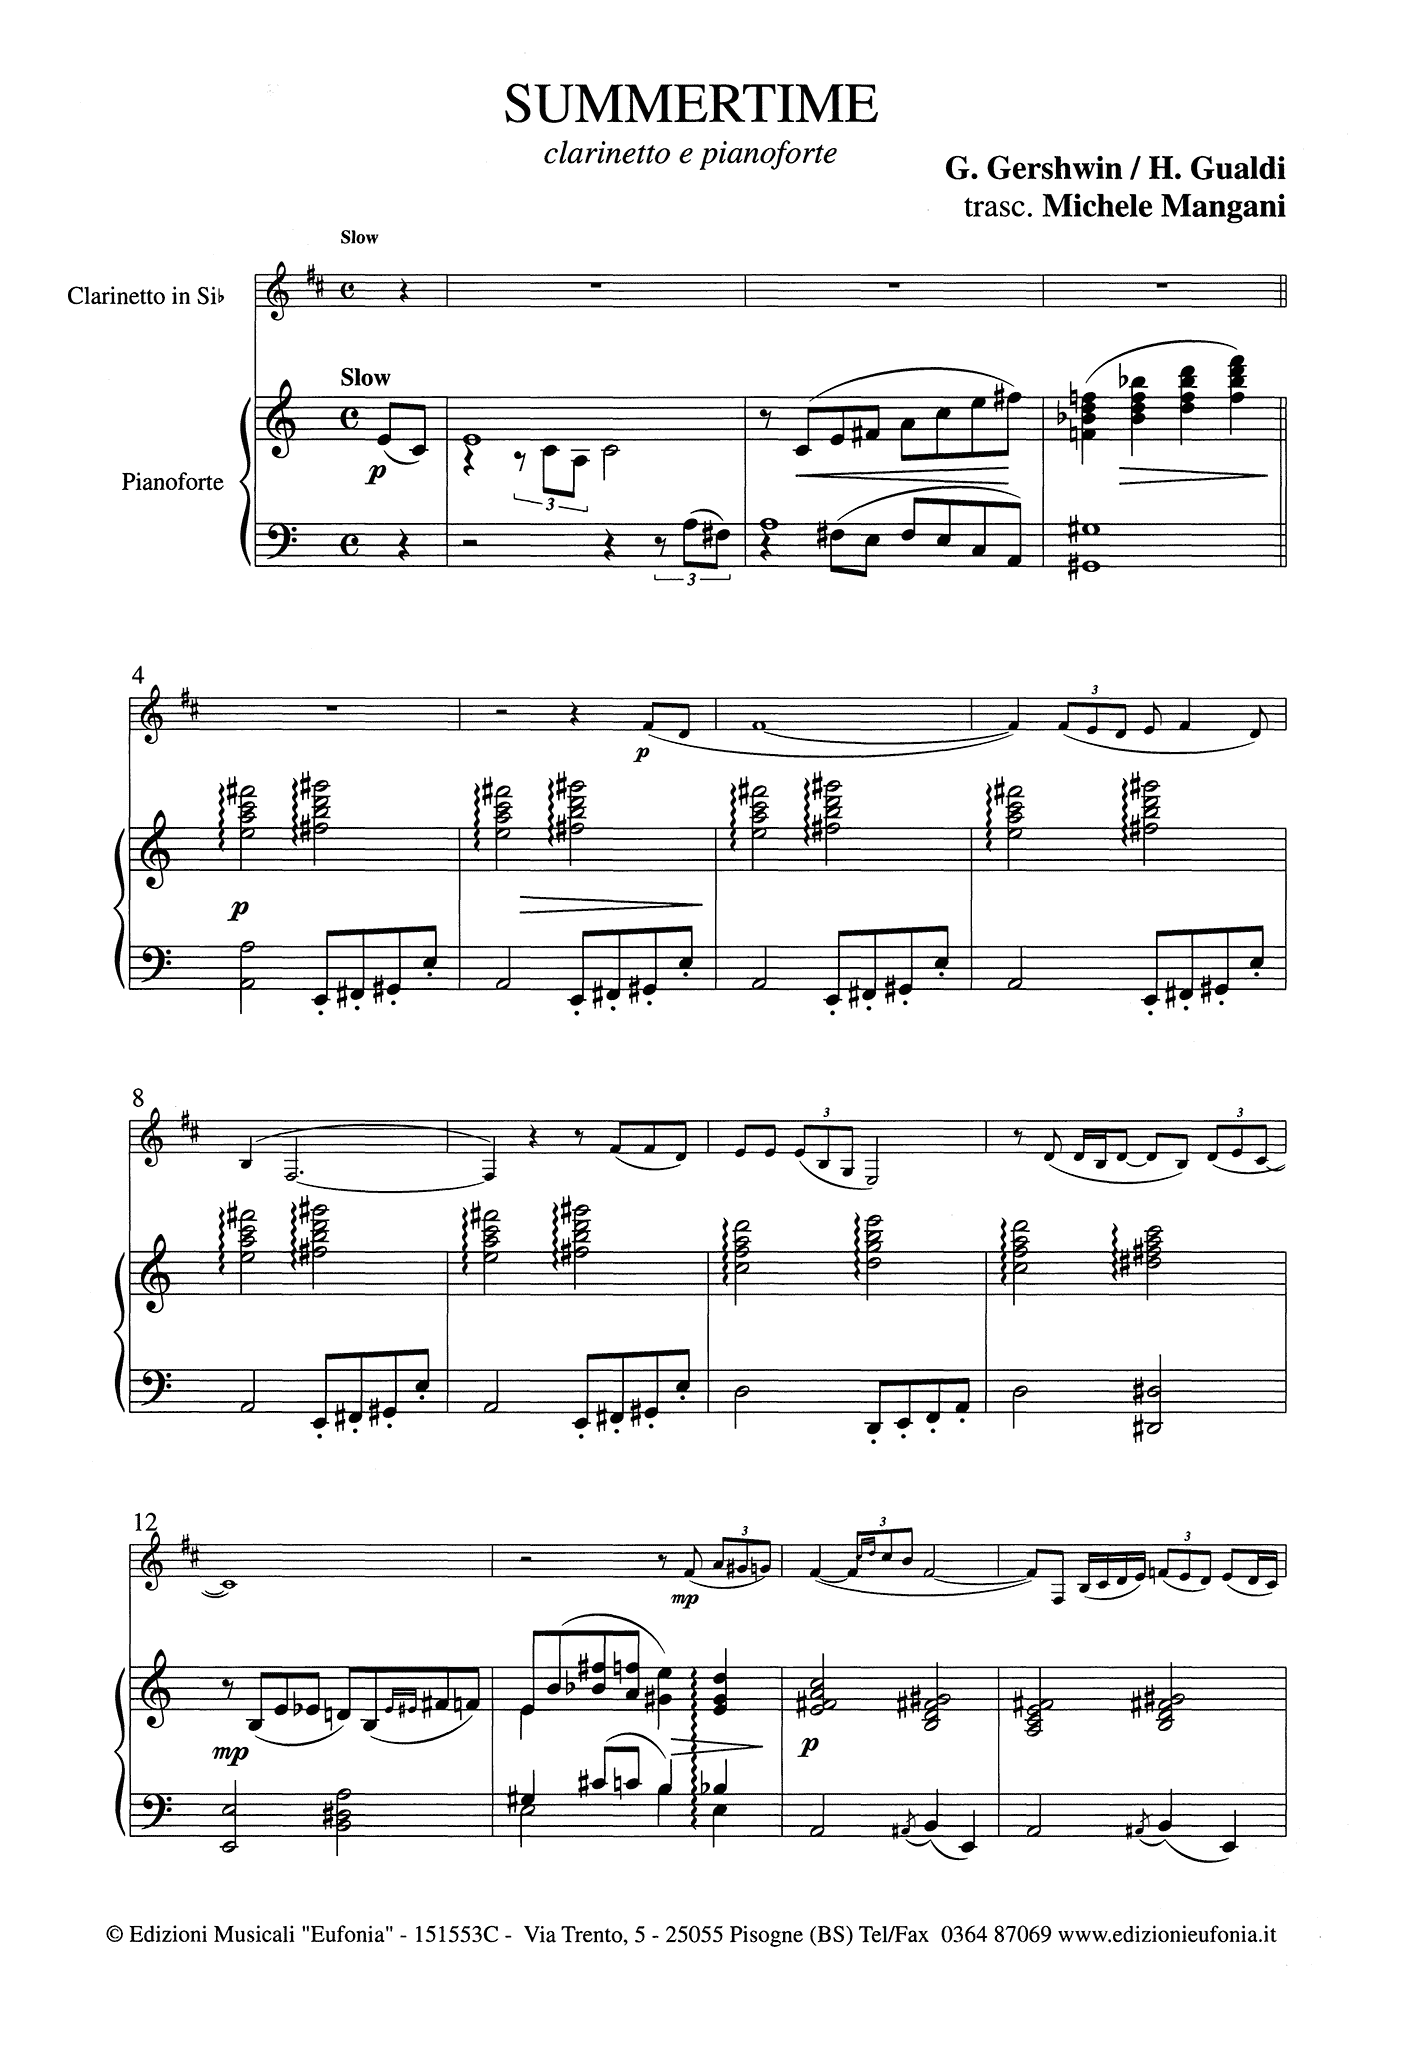 Gershwin Summertime, Hengel Gualdi version clarinet and piano score